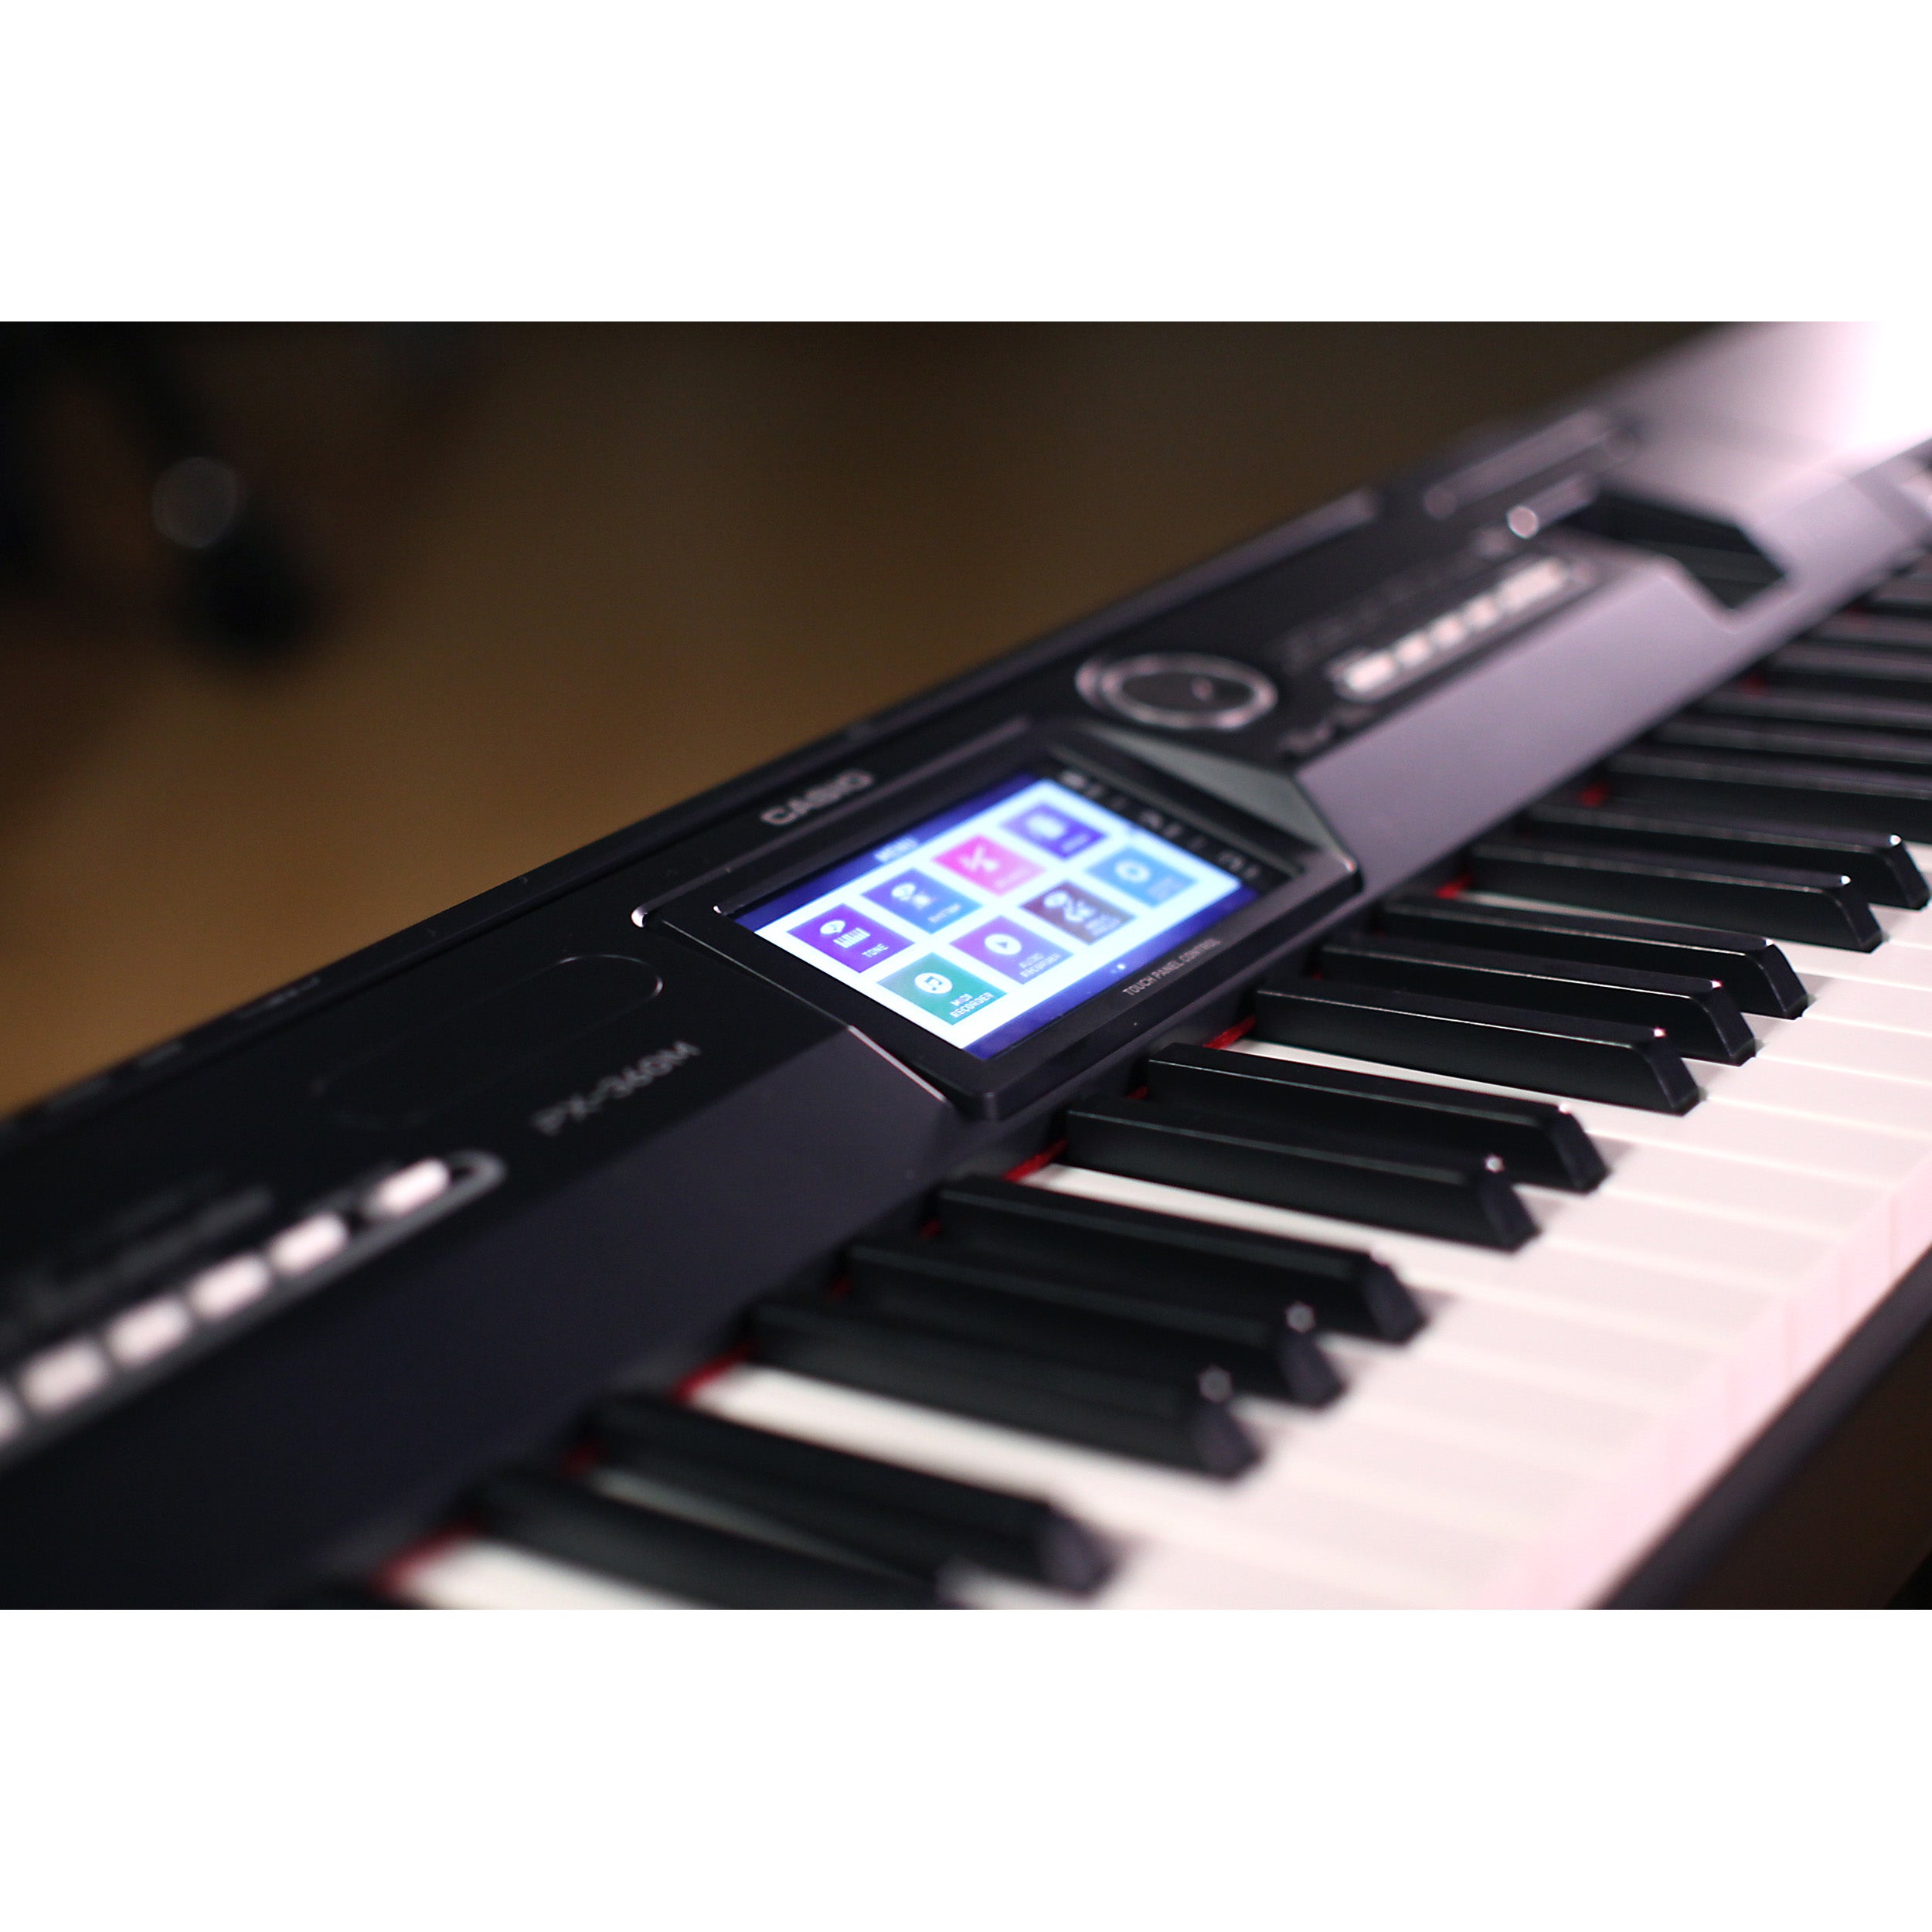 Casio Privia PX-360 Digital Piano - Black – Kraft Music